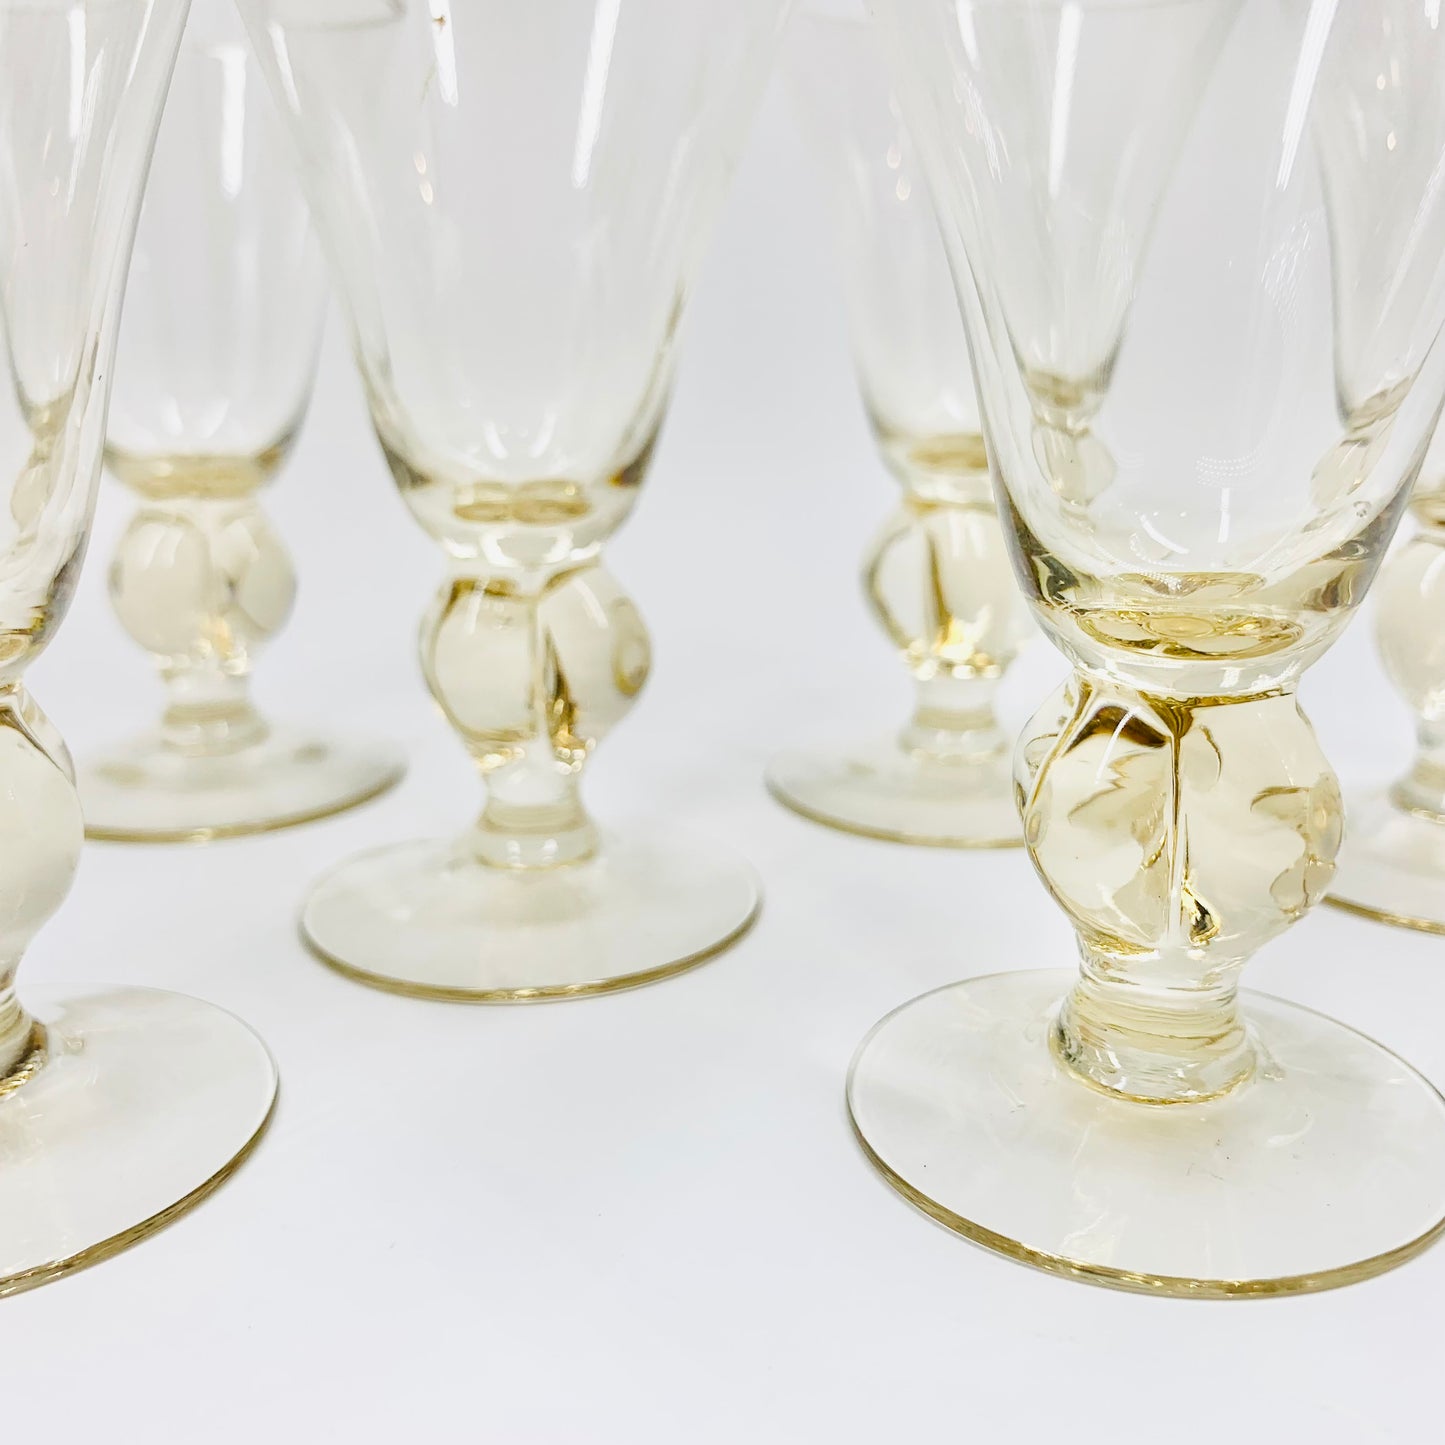 Rare Midcentury Swedish hand made citrine liqueur glasses with short stem